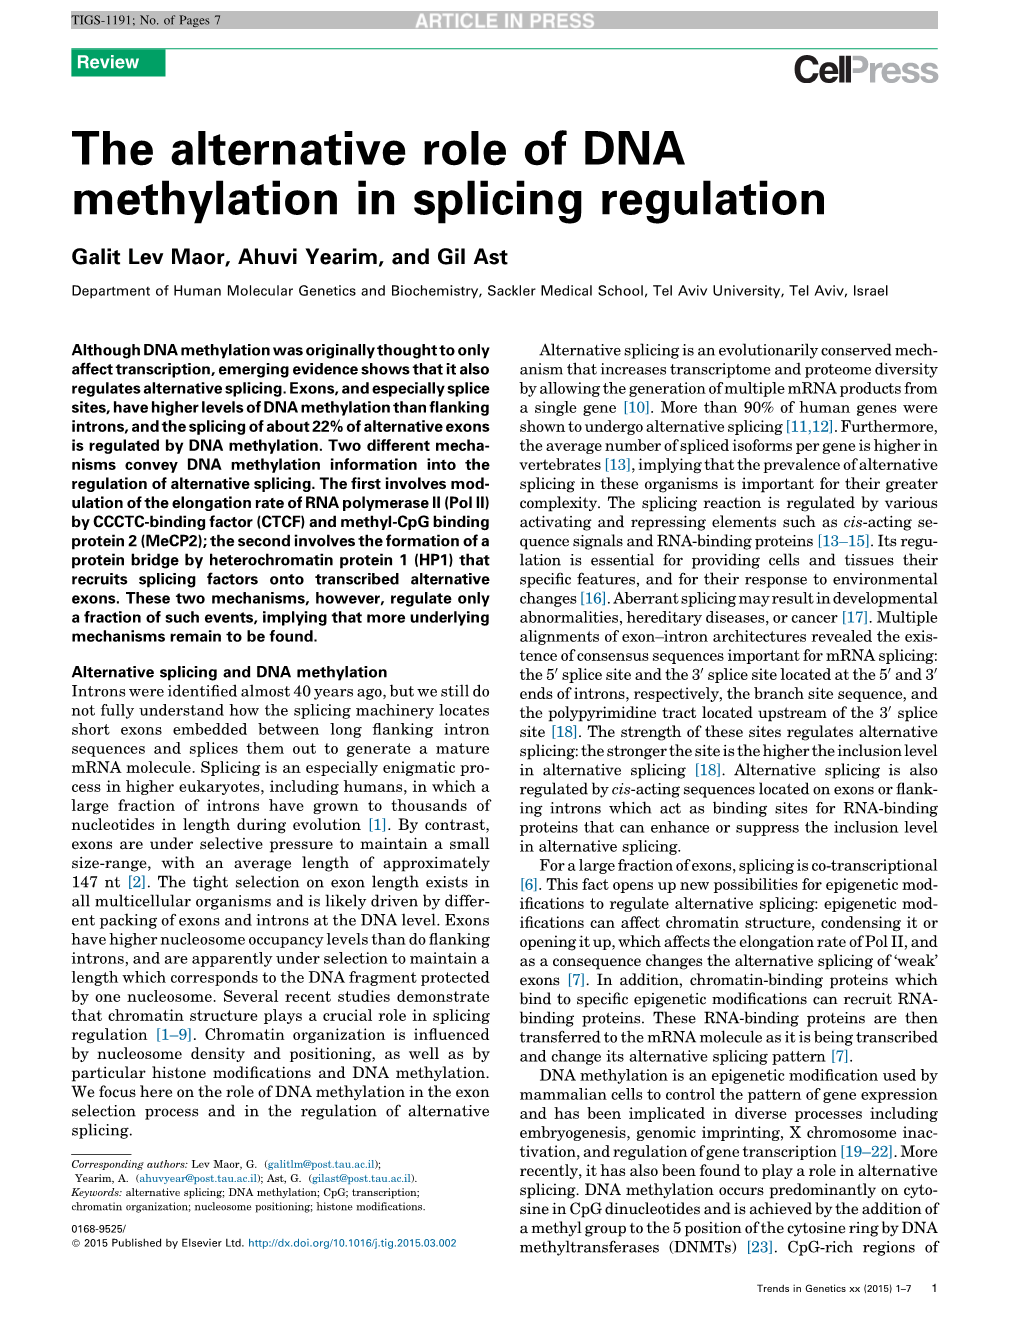 The Alternative Role of DNA Methylation in Splicing Regulation